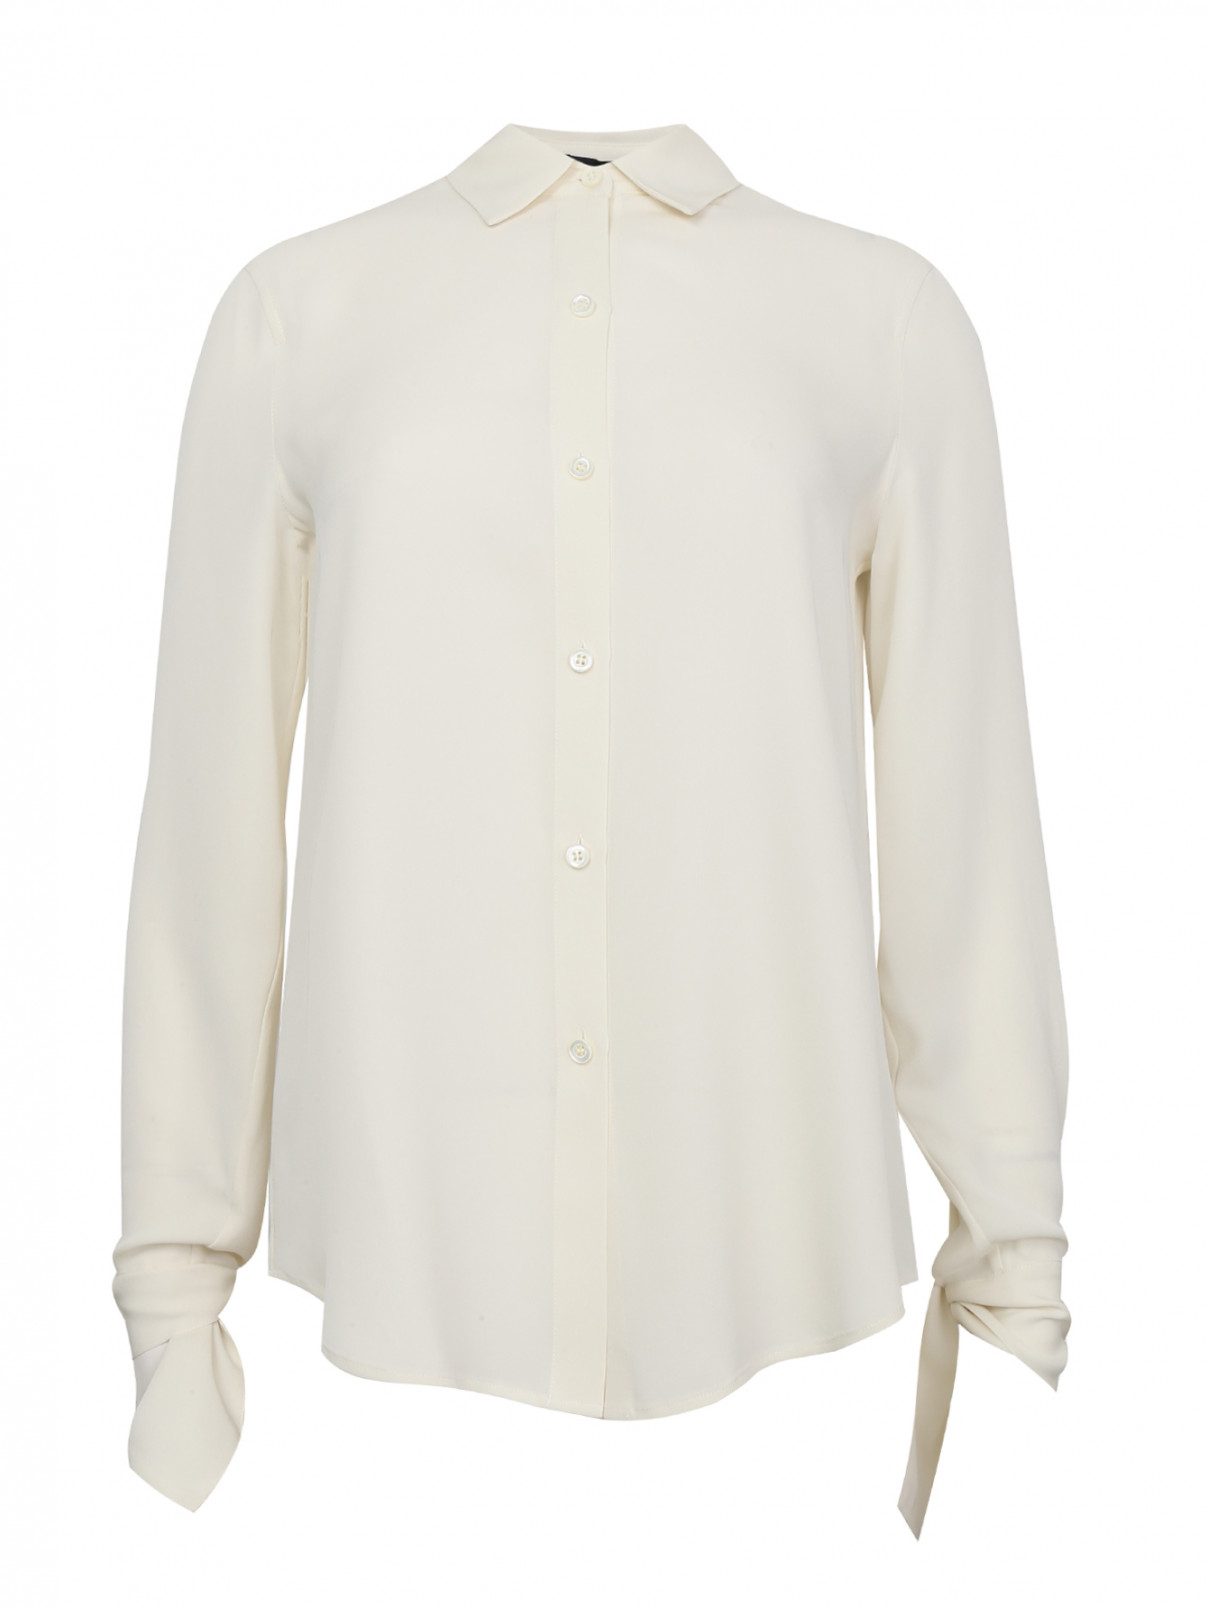 Блуза из шелка с бантами на рукавах Theory  –  Общий вид  – Цвет:  Белый